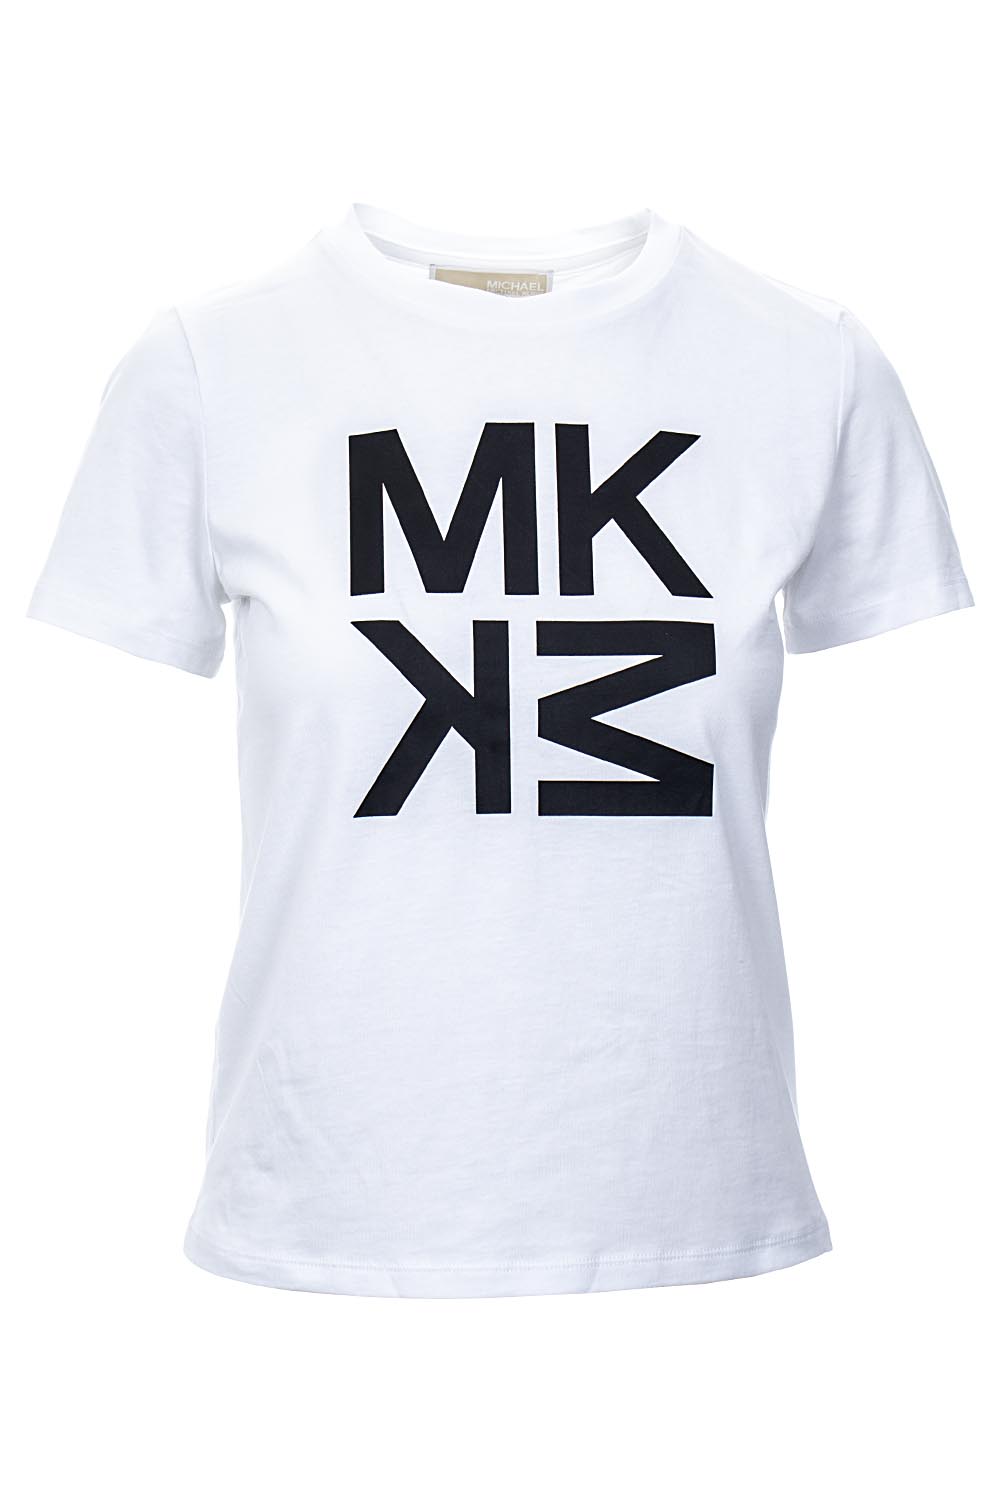 Michael Kors Dámské tričko bílé s monogramem MK Velikost: M